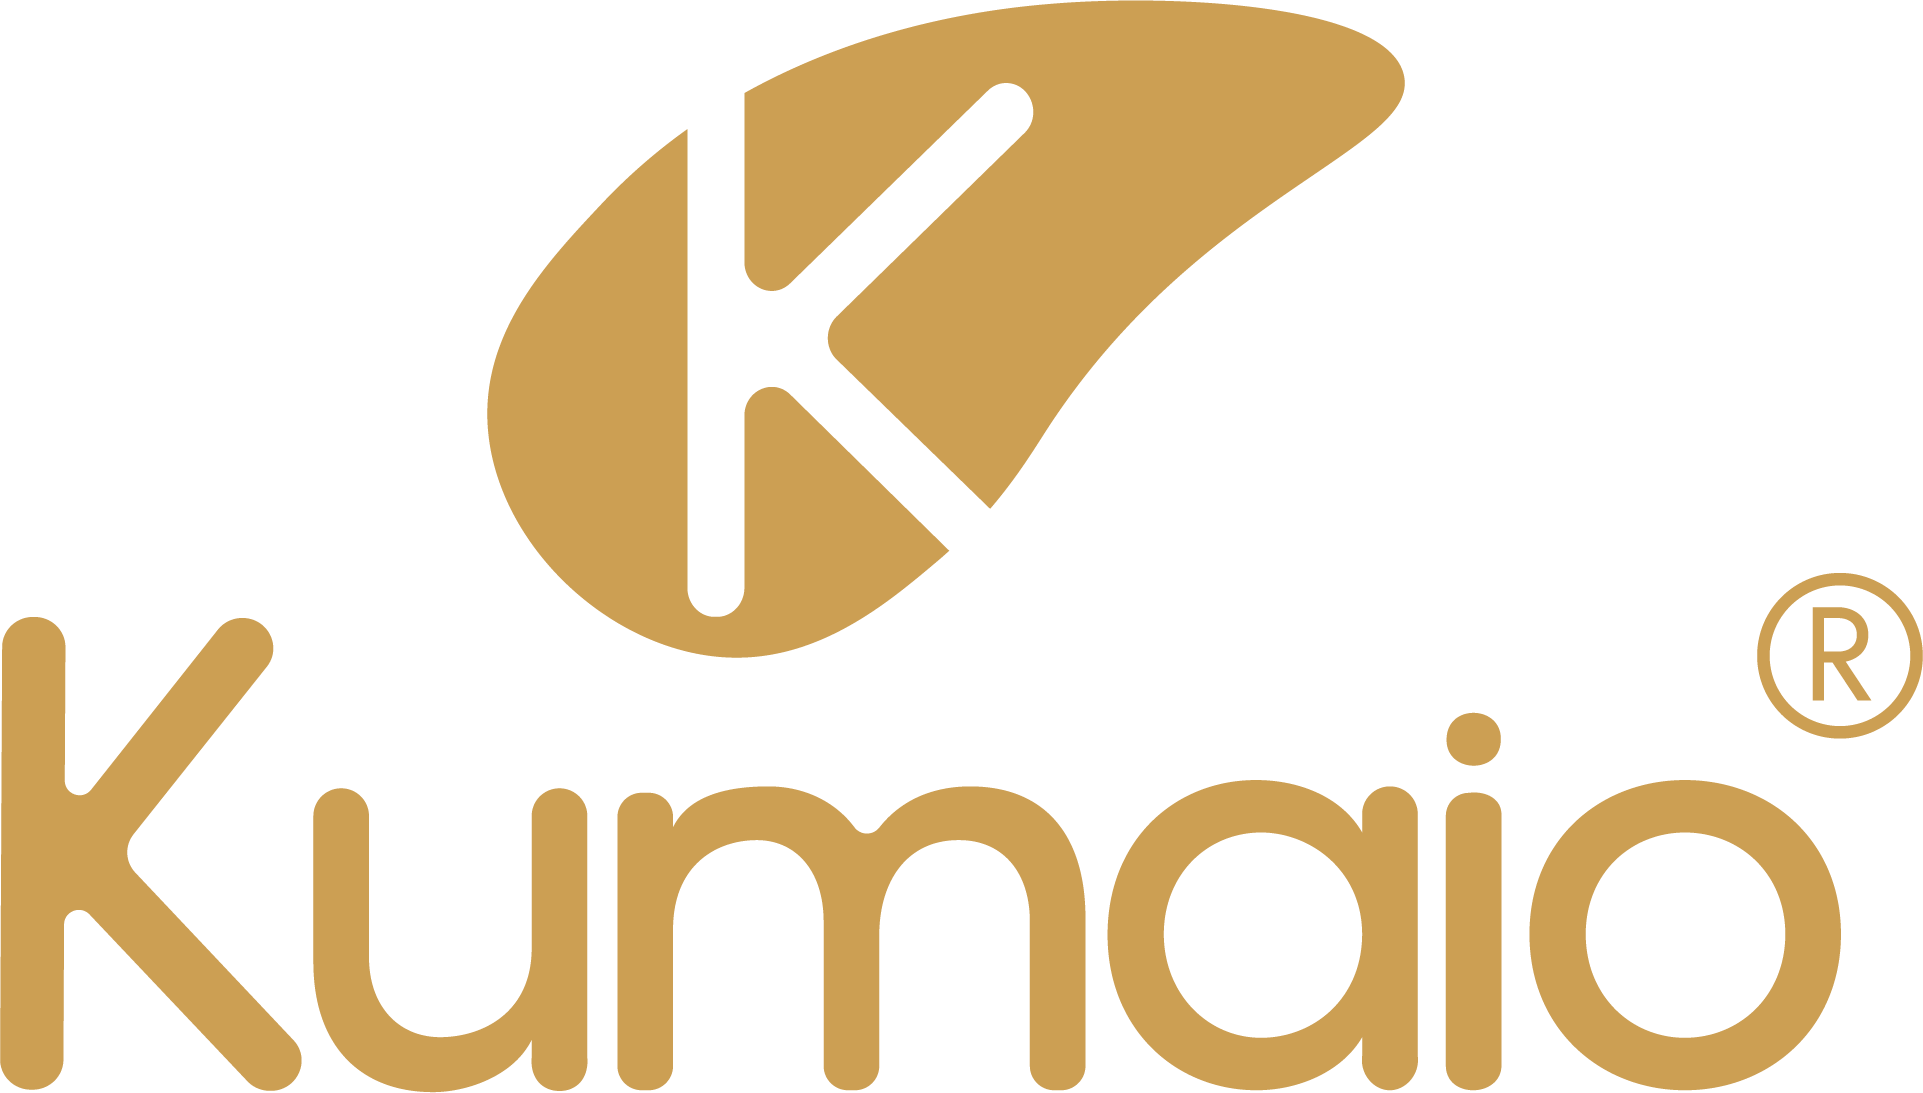 Kumaio® Selecto